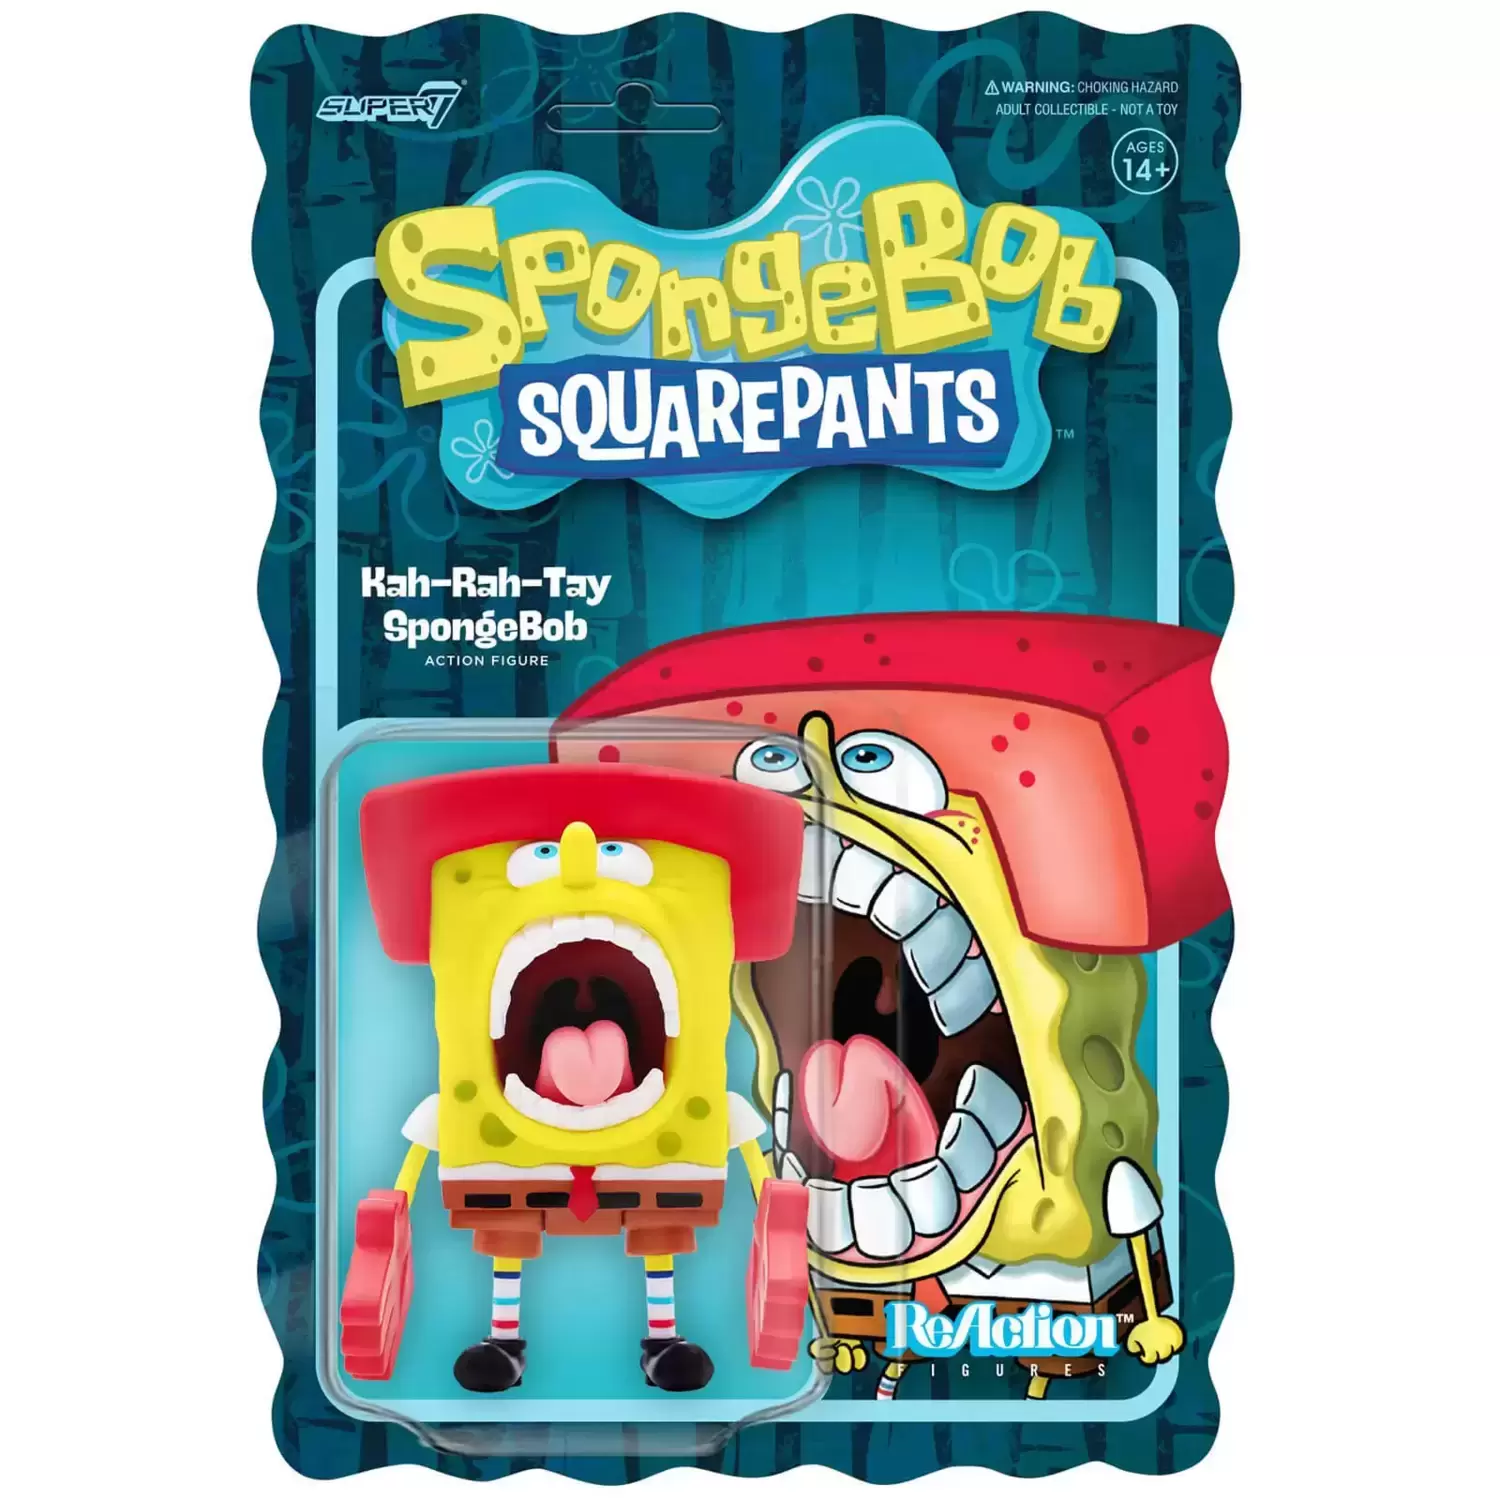 ReAction Figures - Spongebob Squarepants - Kah-Rah-Tay SpongeBob